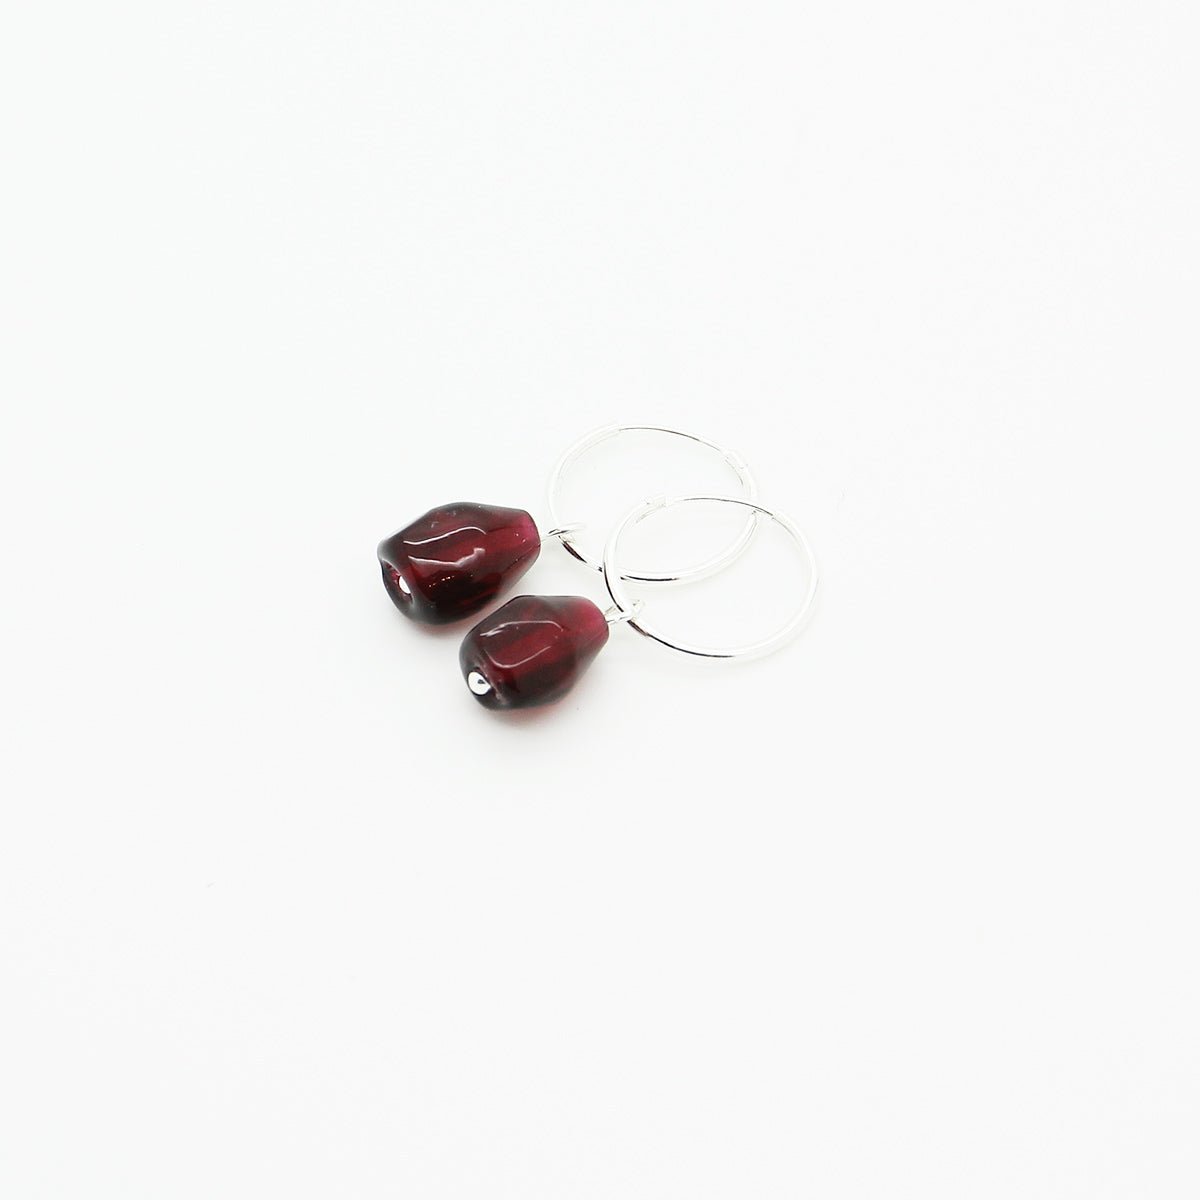 Pomegranate Hoop Earrings, Single Glass Seeds - Yalda Concept Store Persan